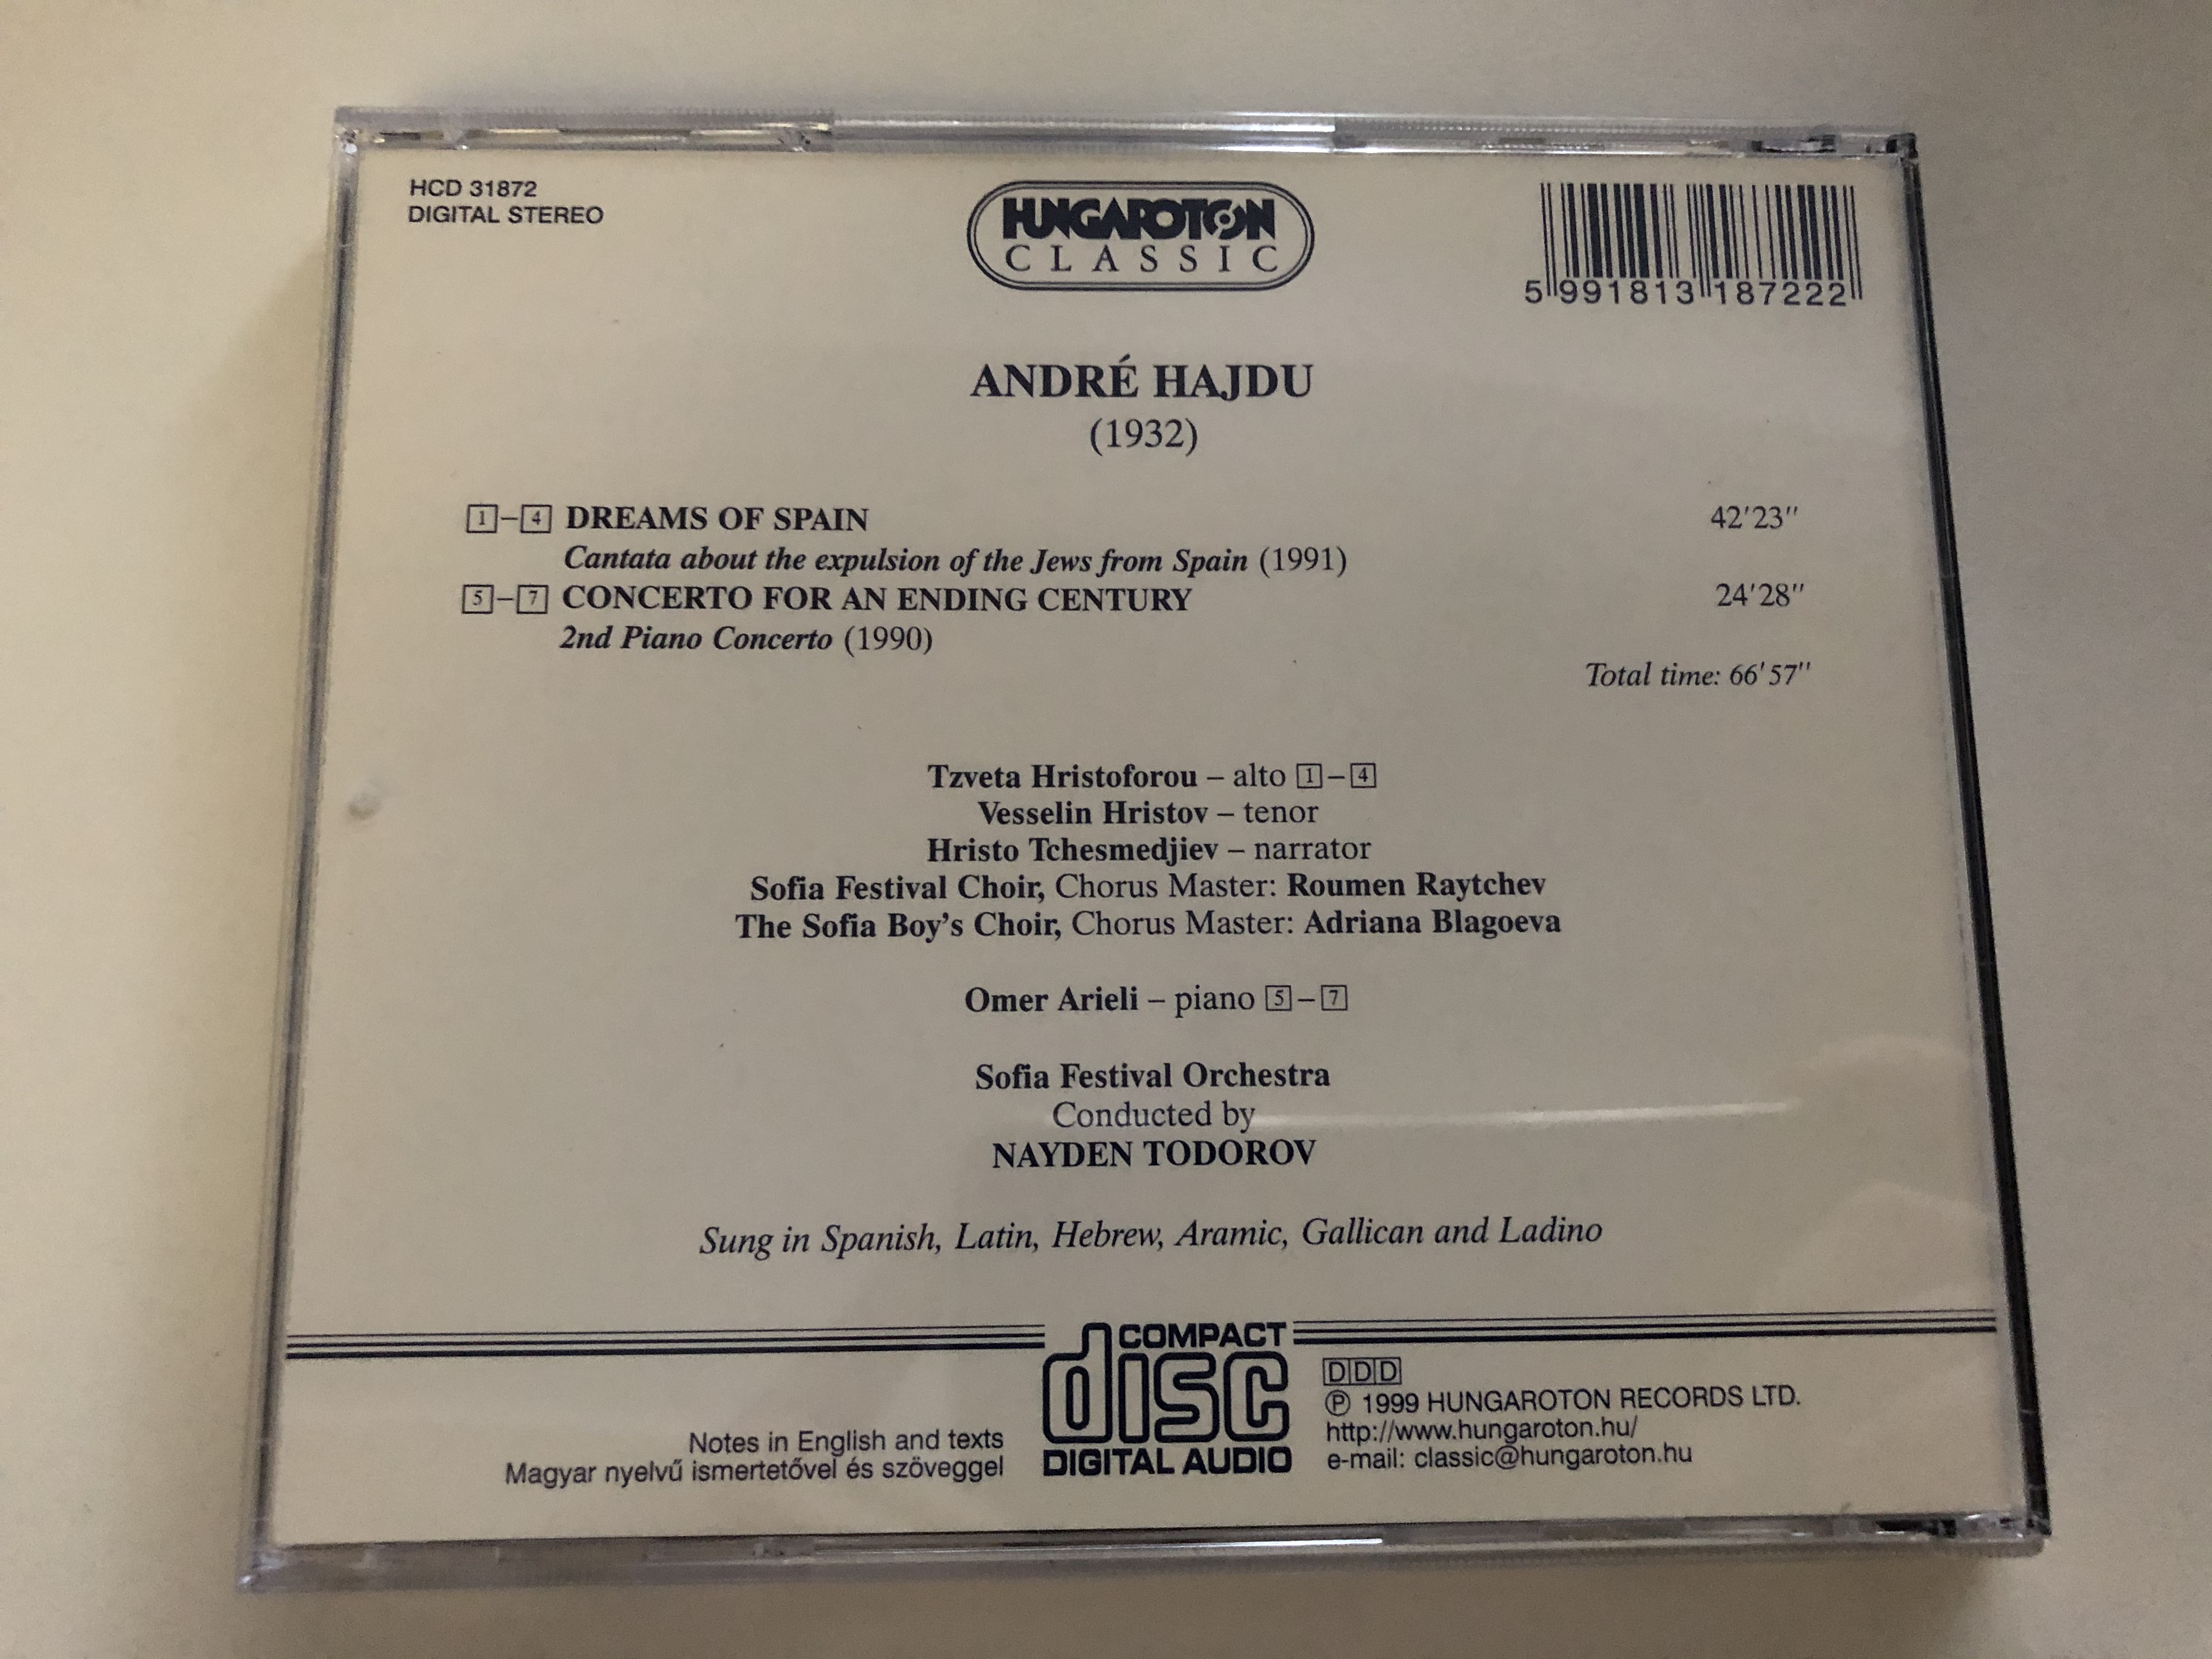 andre-hajdu-dreams-of-spain-concerto-for-an-ending-century-hungaroton-classic-audio-cd-1999-stereo-hcd-31872-15-.jpg